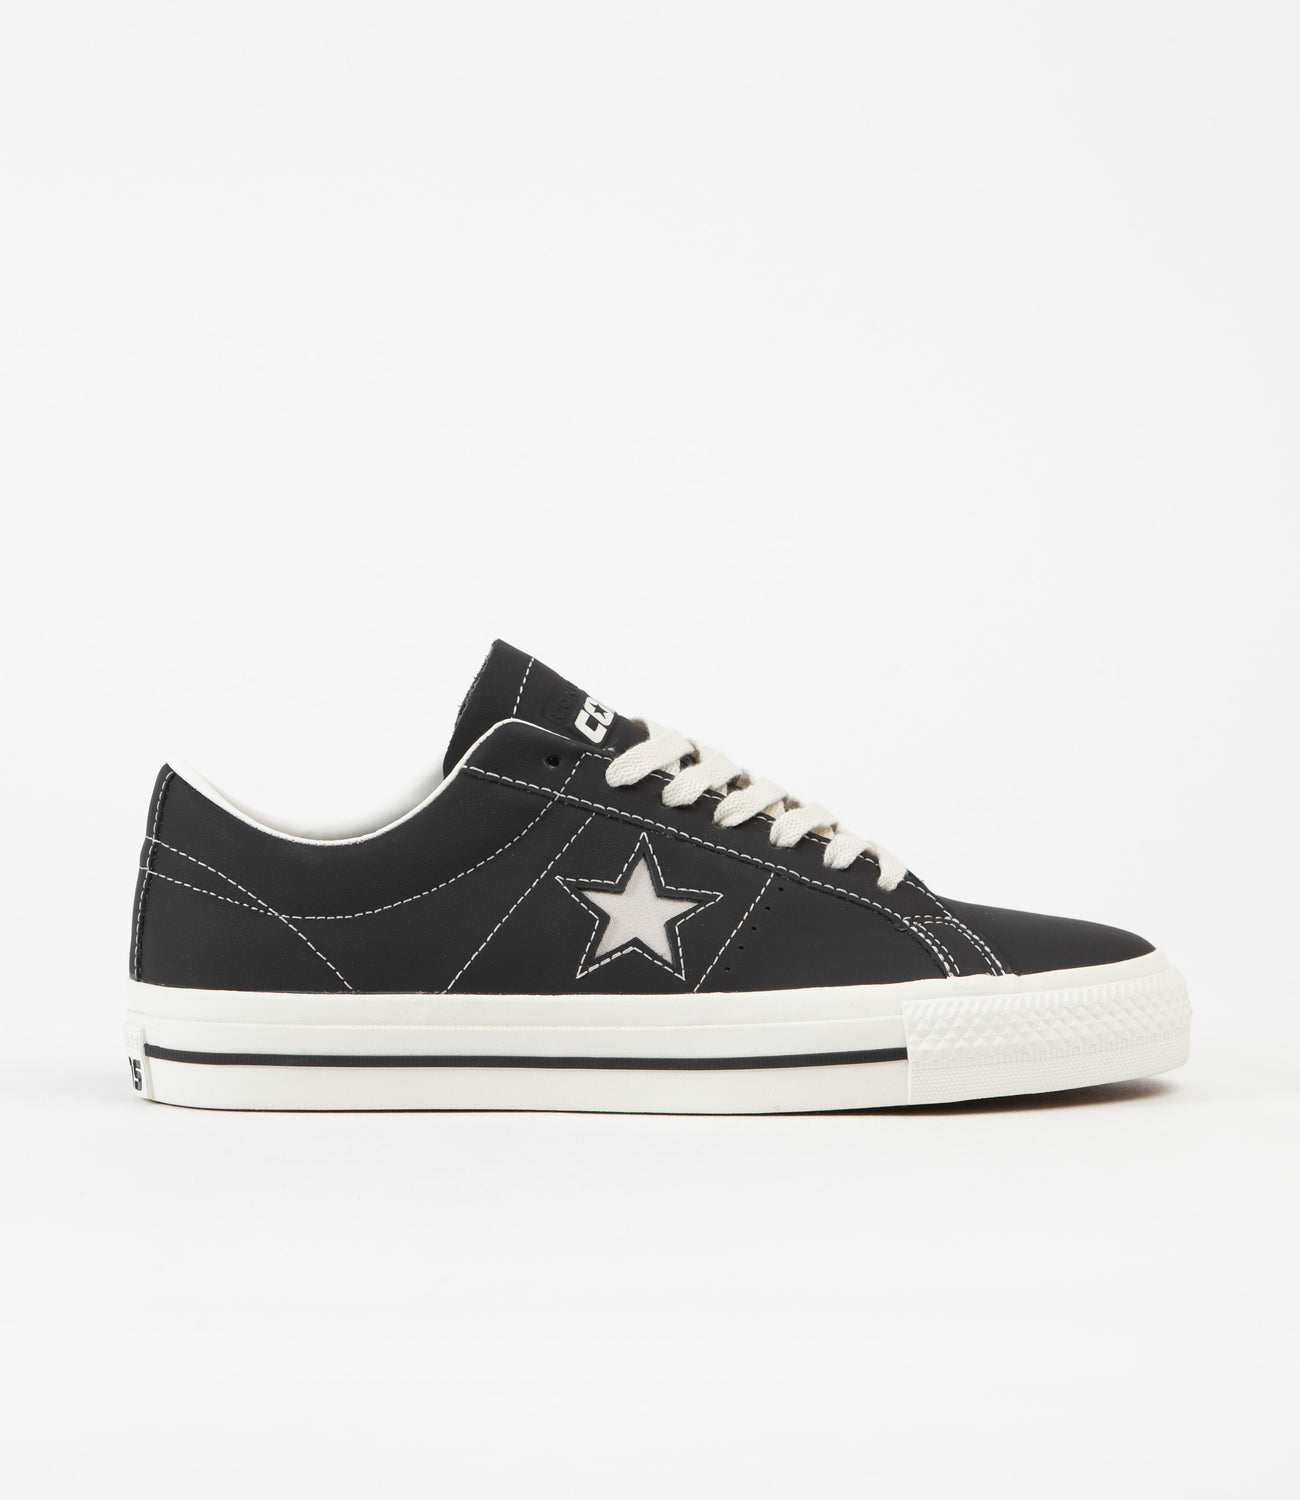 Converse One Star Pro Ox Leather Shoes - Black / Black / Egret | Flatspot